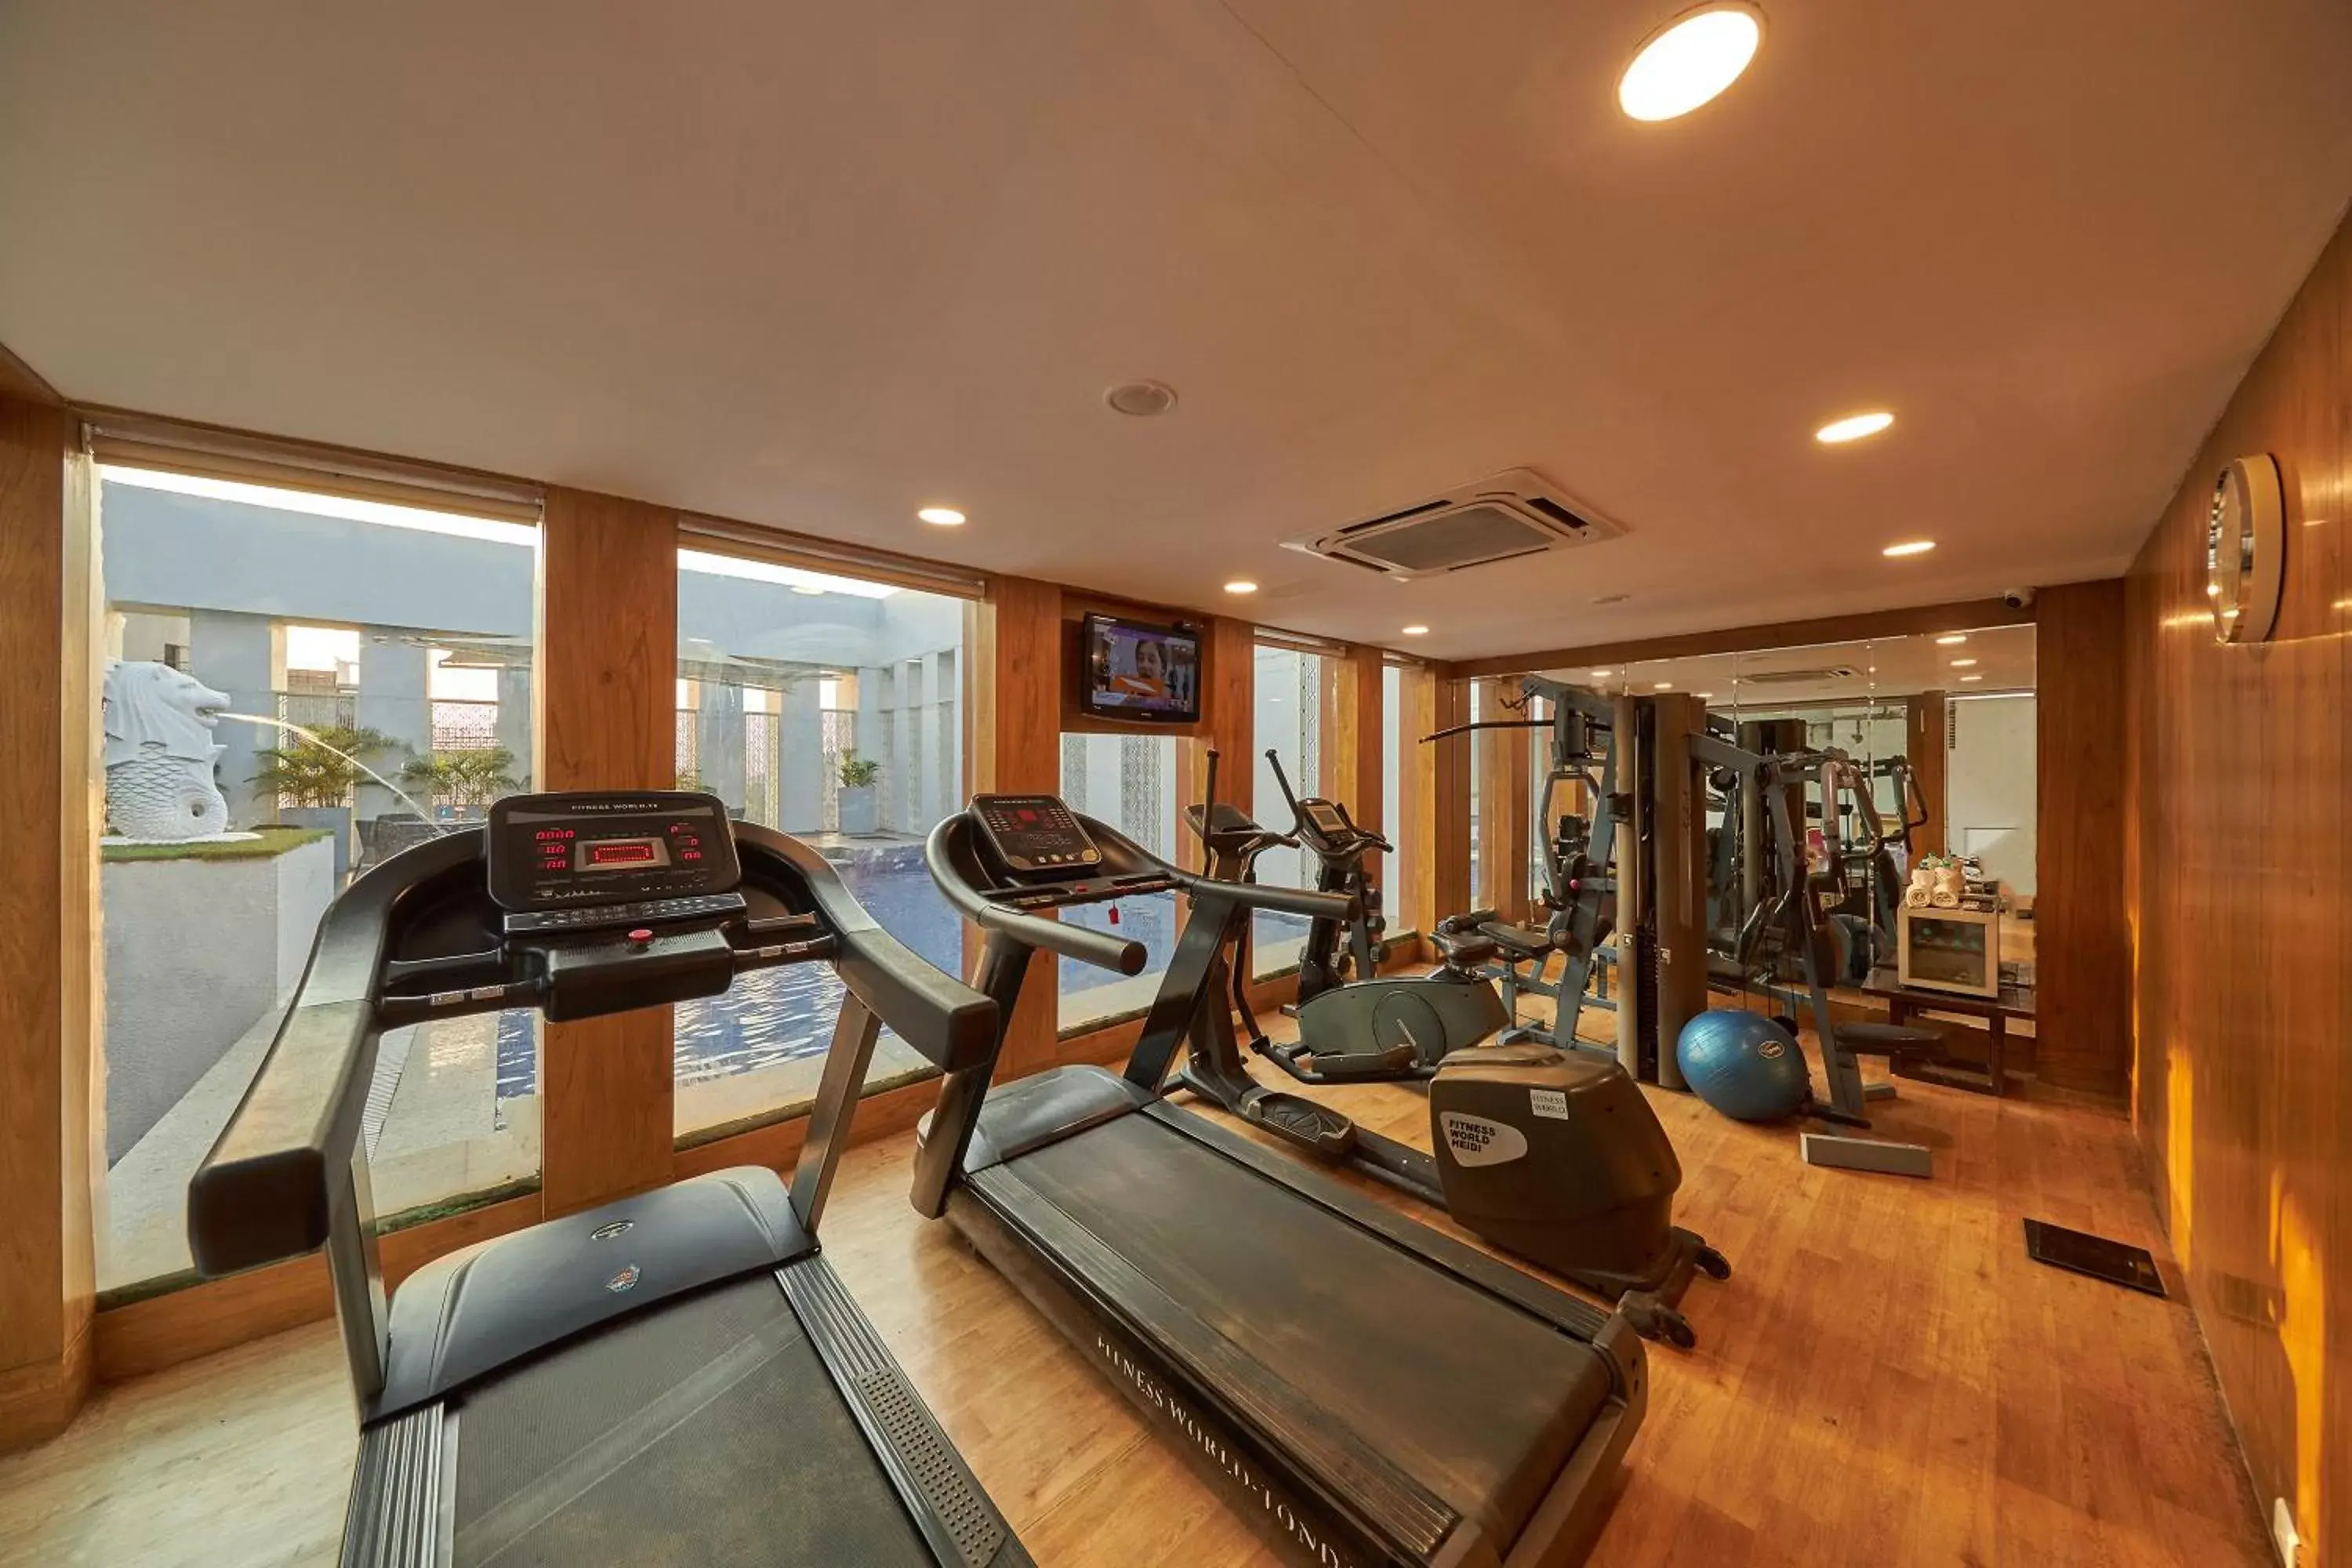 Fitness centre/facilities, Fitness Center/Facilities in Royal Orchid Central Grazia, Navi Mumbai